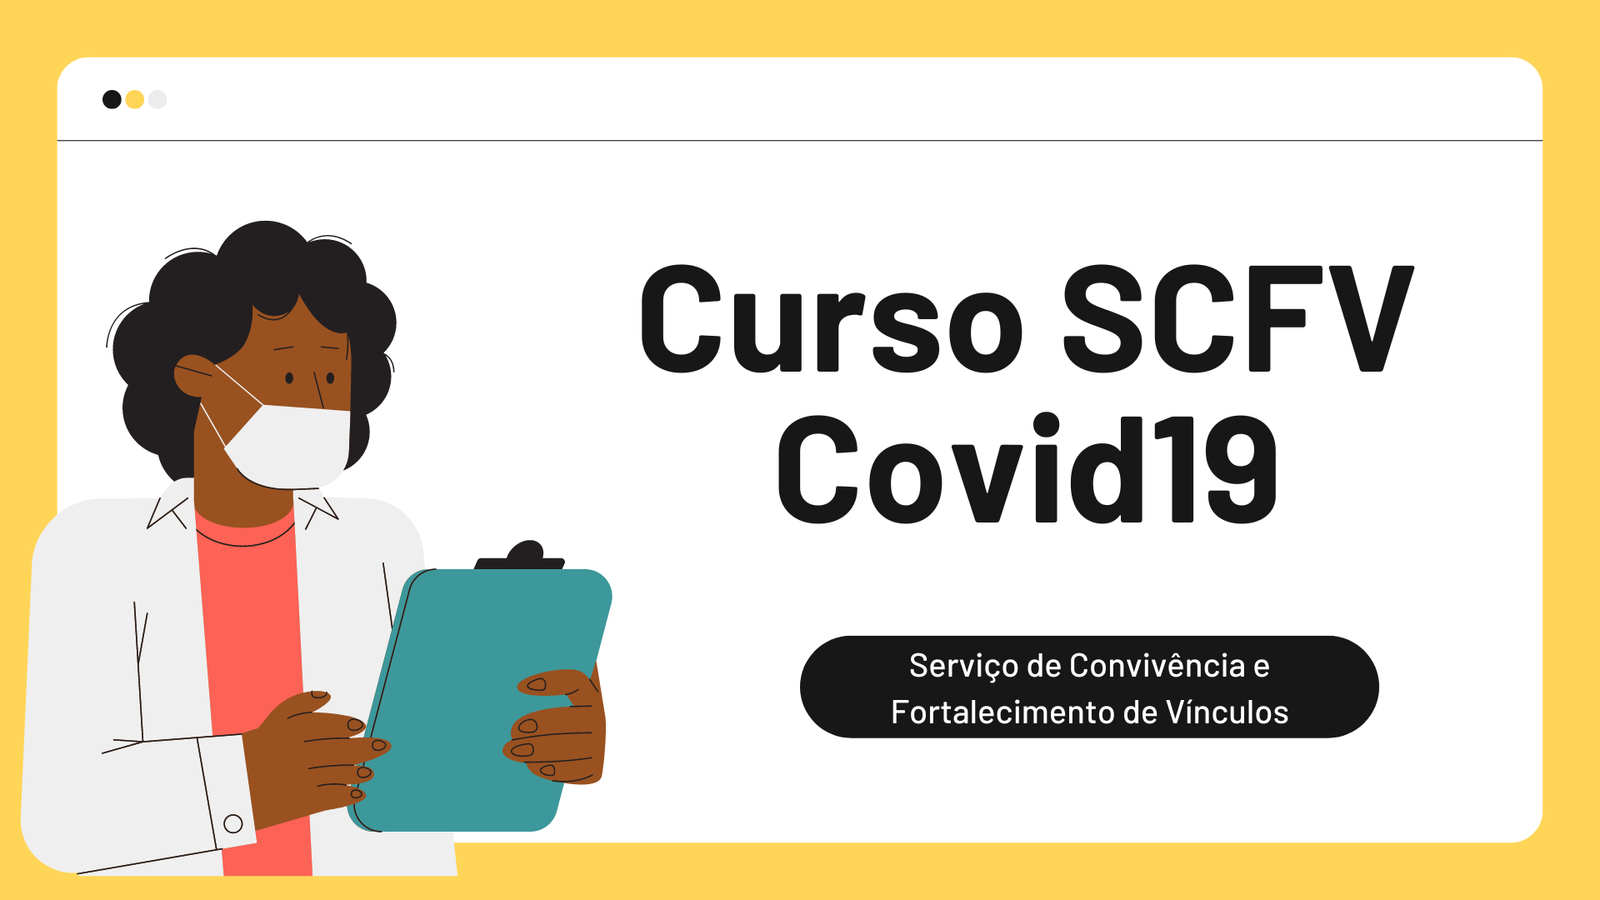 Curso SCFV Covid19